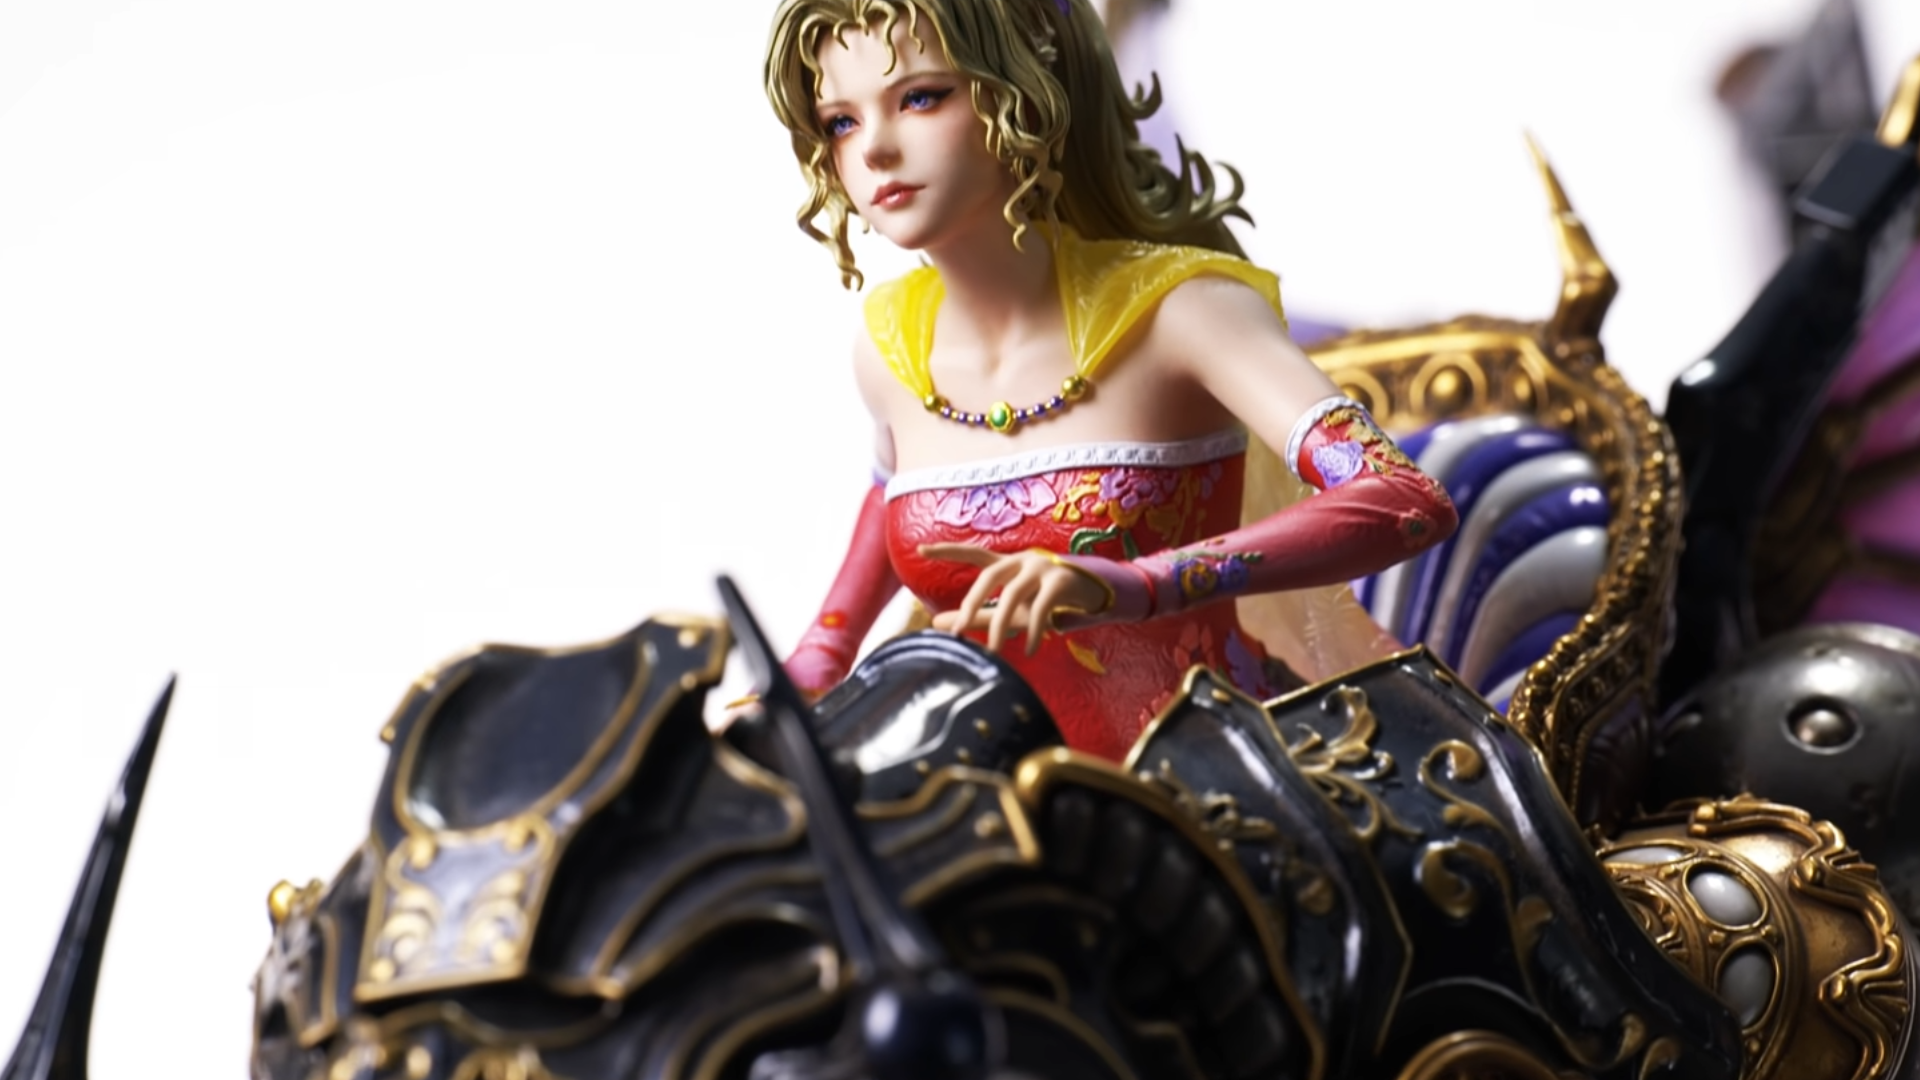 Final Fantasy Creator Calls Out Square Enix For Price Of 11 6k Ff6 Statue Pledge Times